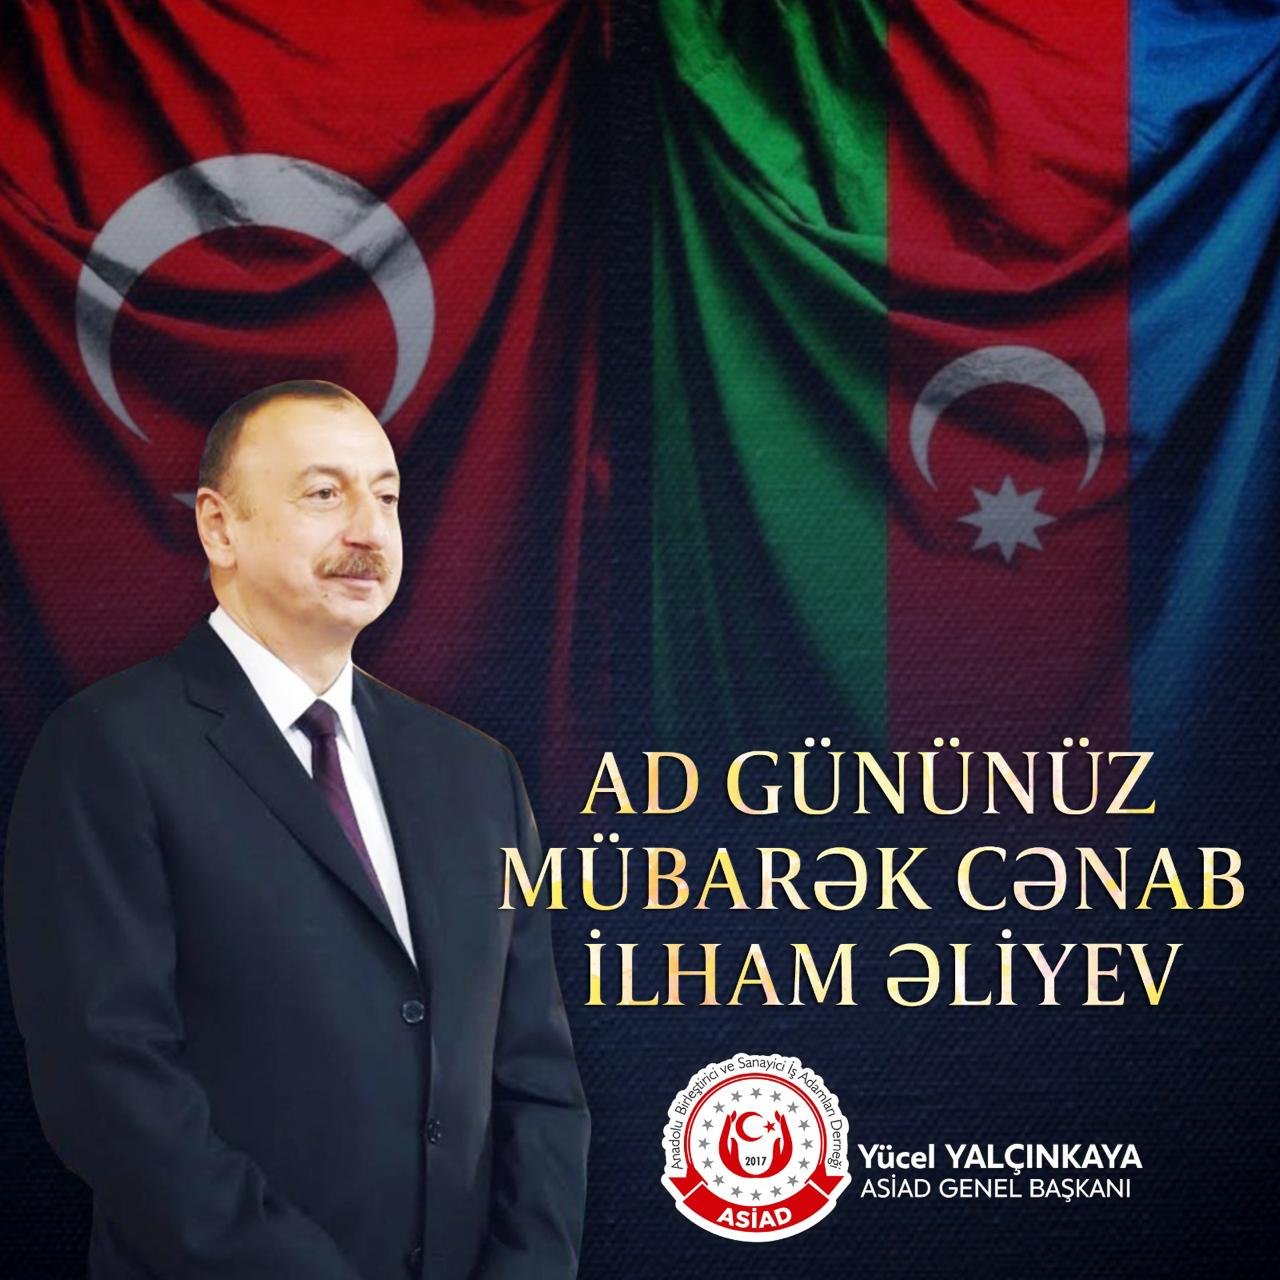 ASİAD Genel Başkanı Yücel Yalçınkaya Cumhurbaşkanı İlham Aliyev'in Doğum Gününü Kutladı